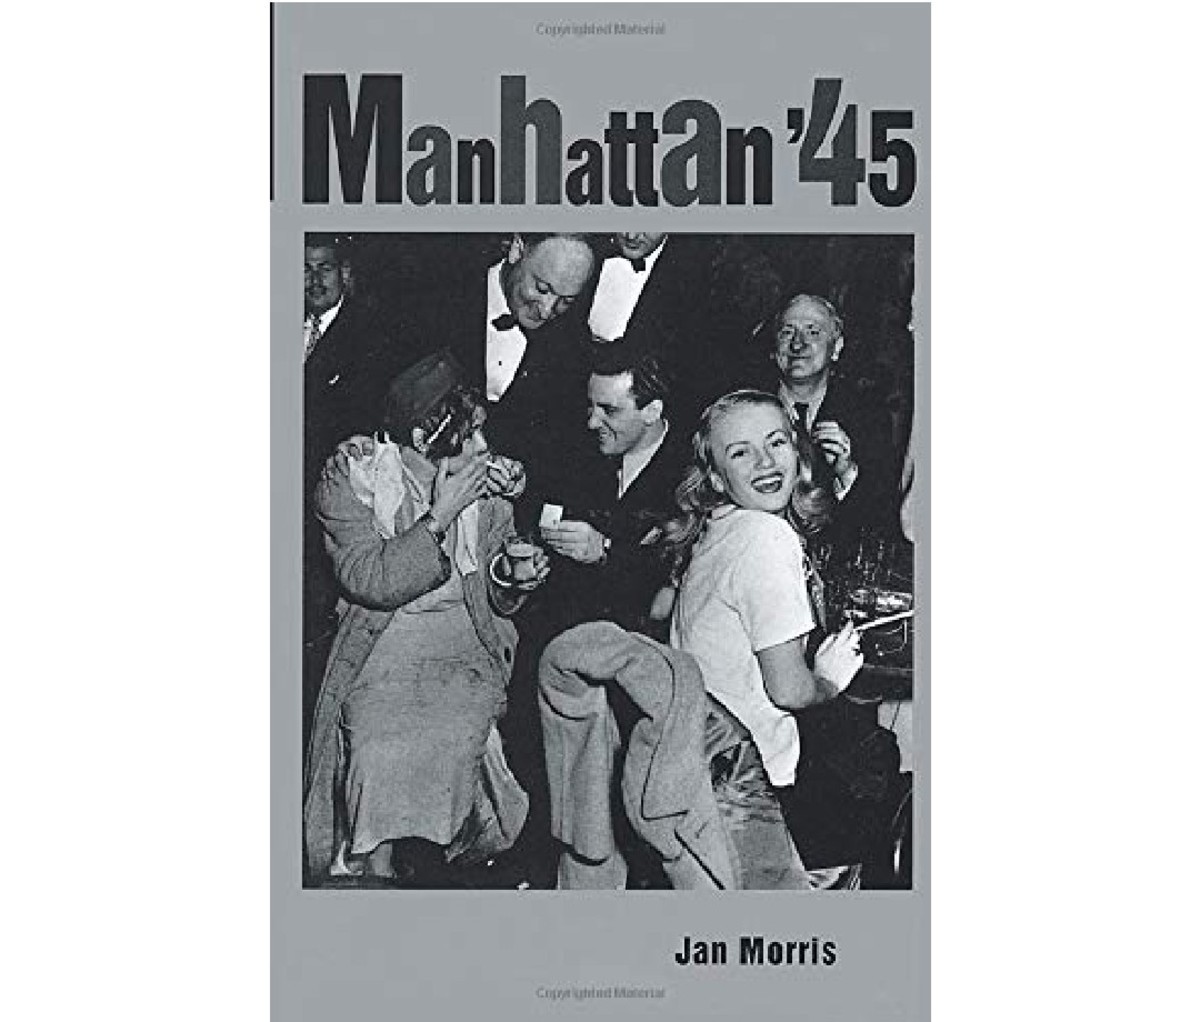 Manhattan '45 by Jan Morris